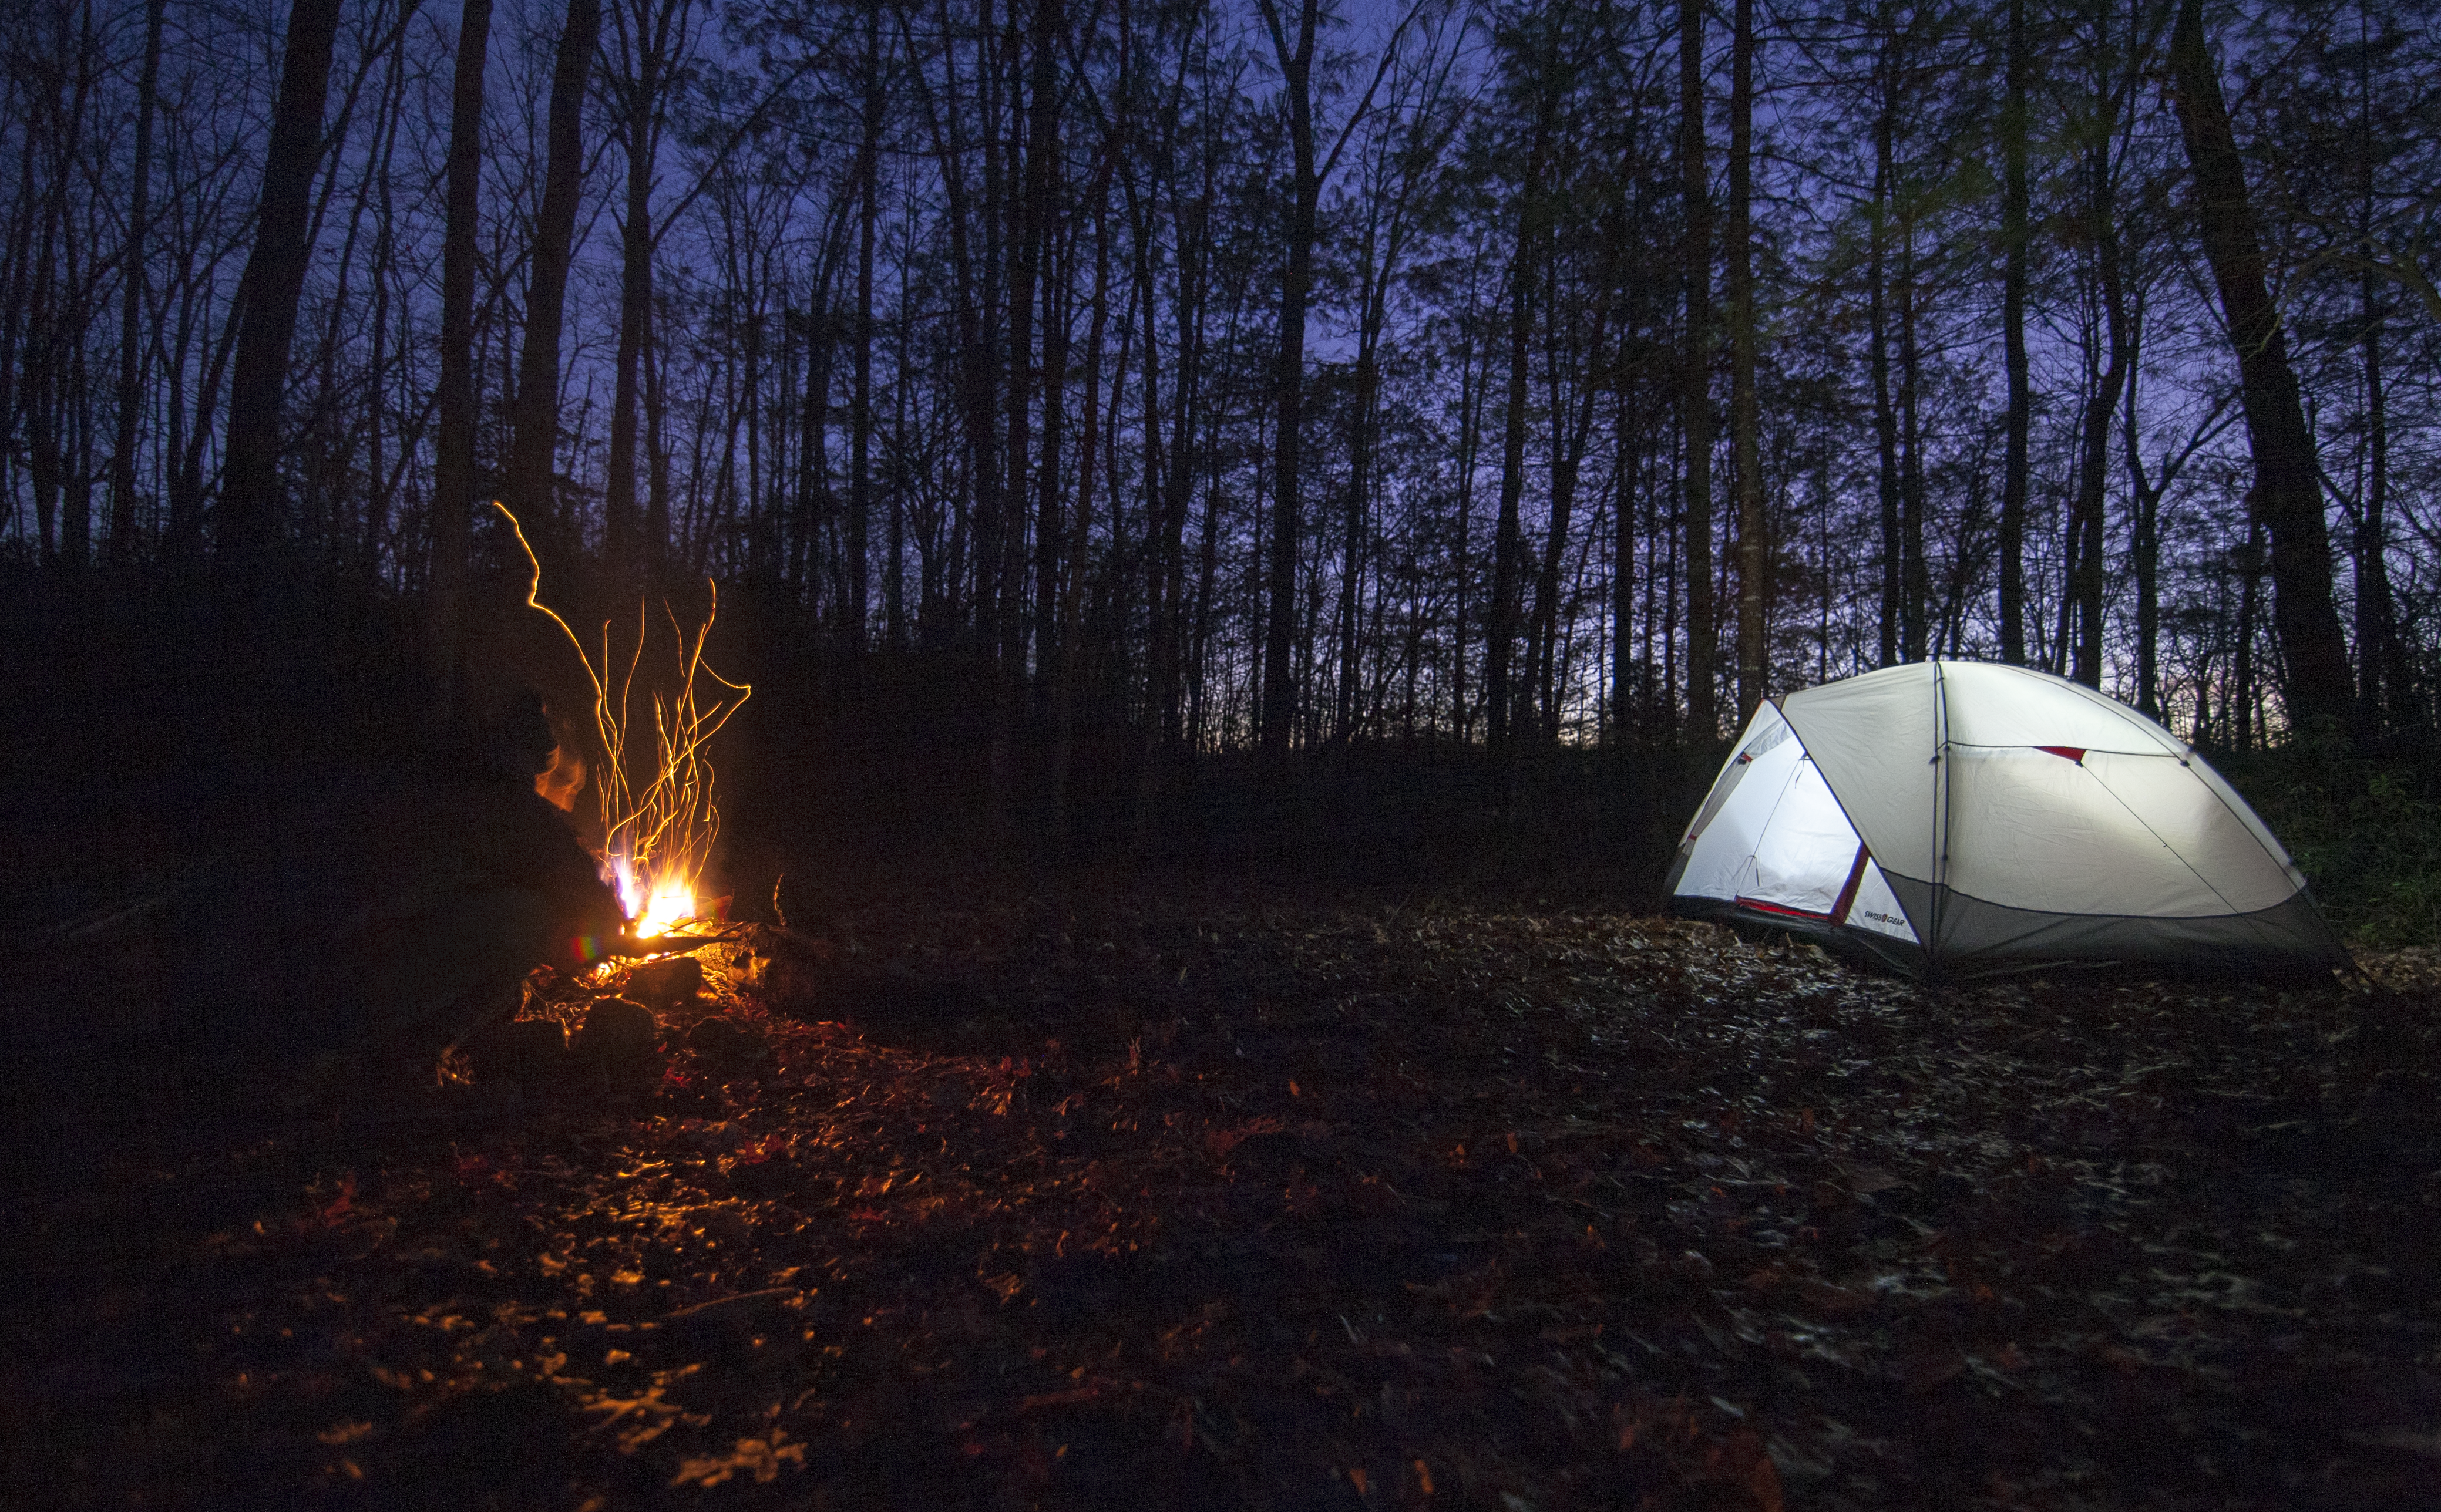 Runner Up - Backcountry Camping Near the Sunset Overlook - Tyler Smith